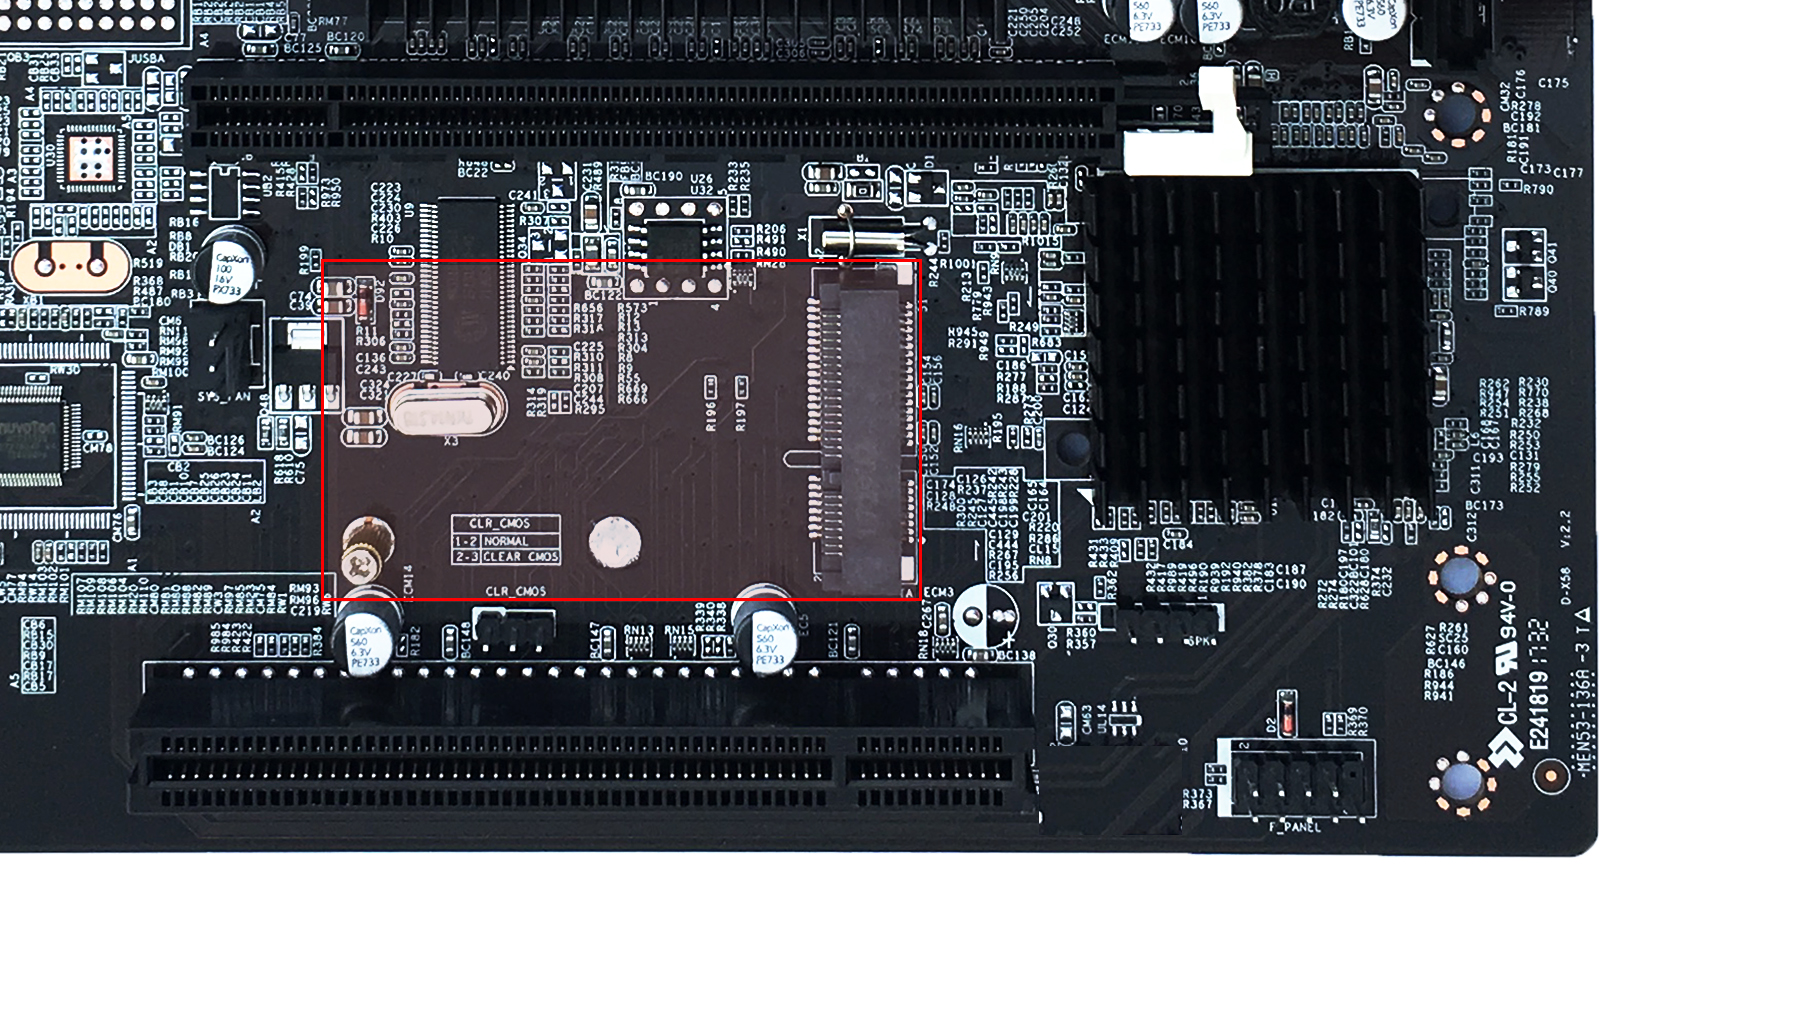 X58 Motherboard LGA 1366 Pin Intel CPU with USB2.0 SATA2.0 Motherboard